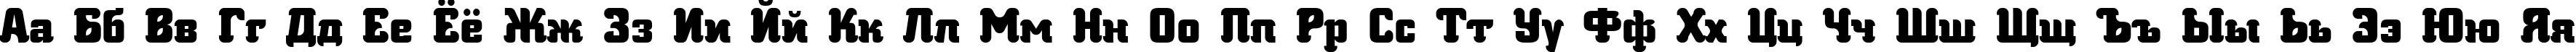 Пример написания русского алфавита шрифтом FK City Round.kz